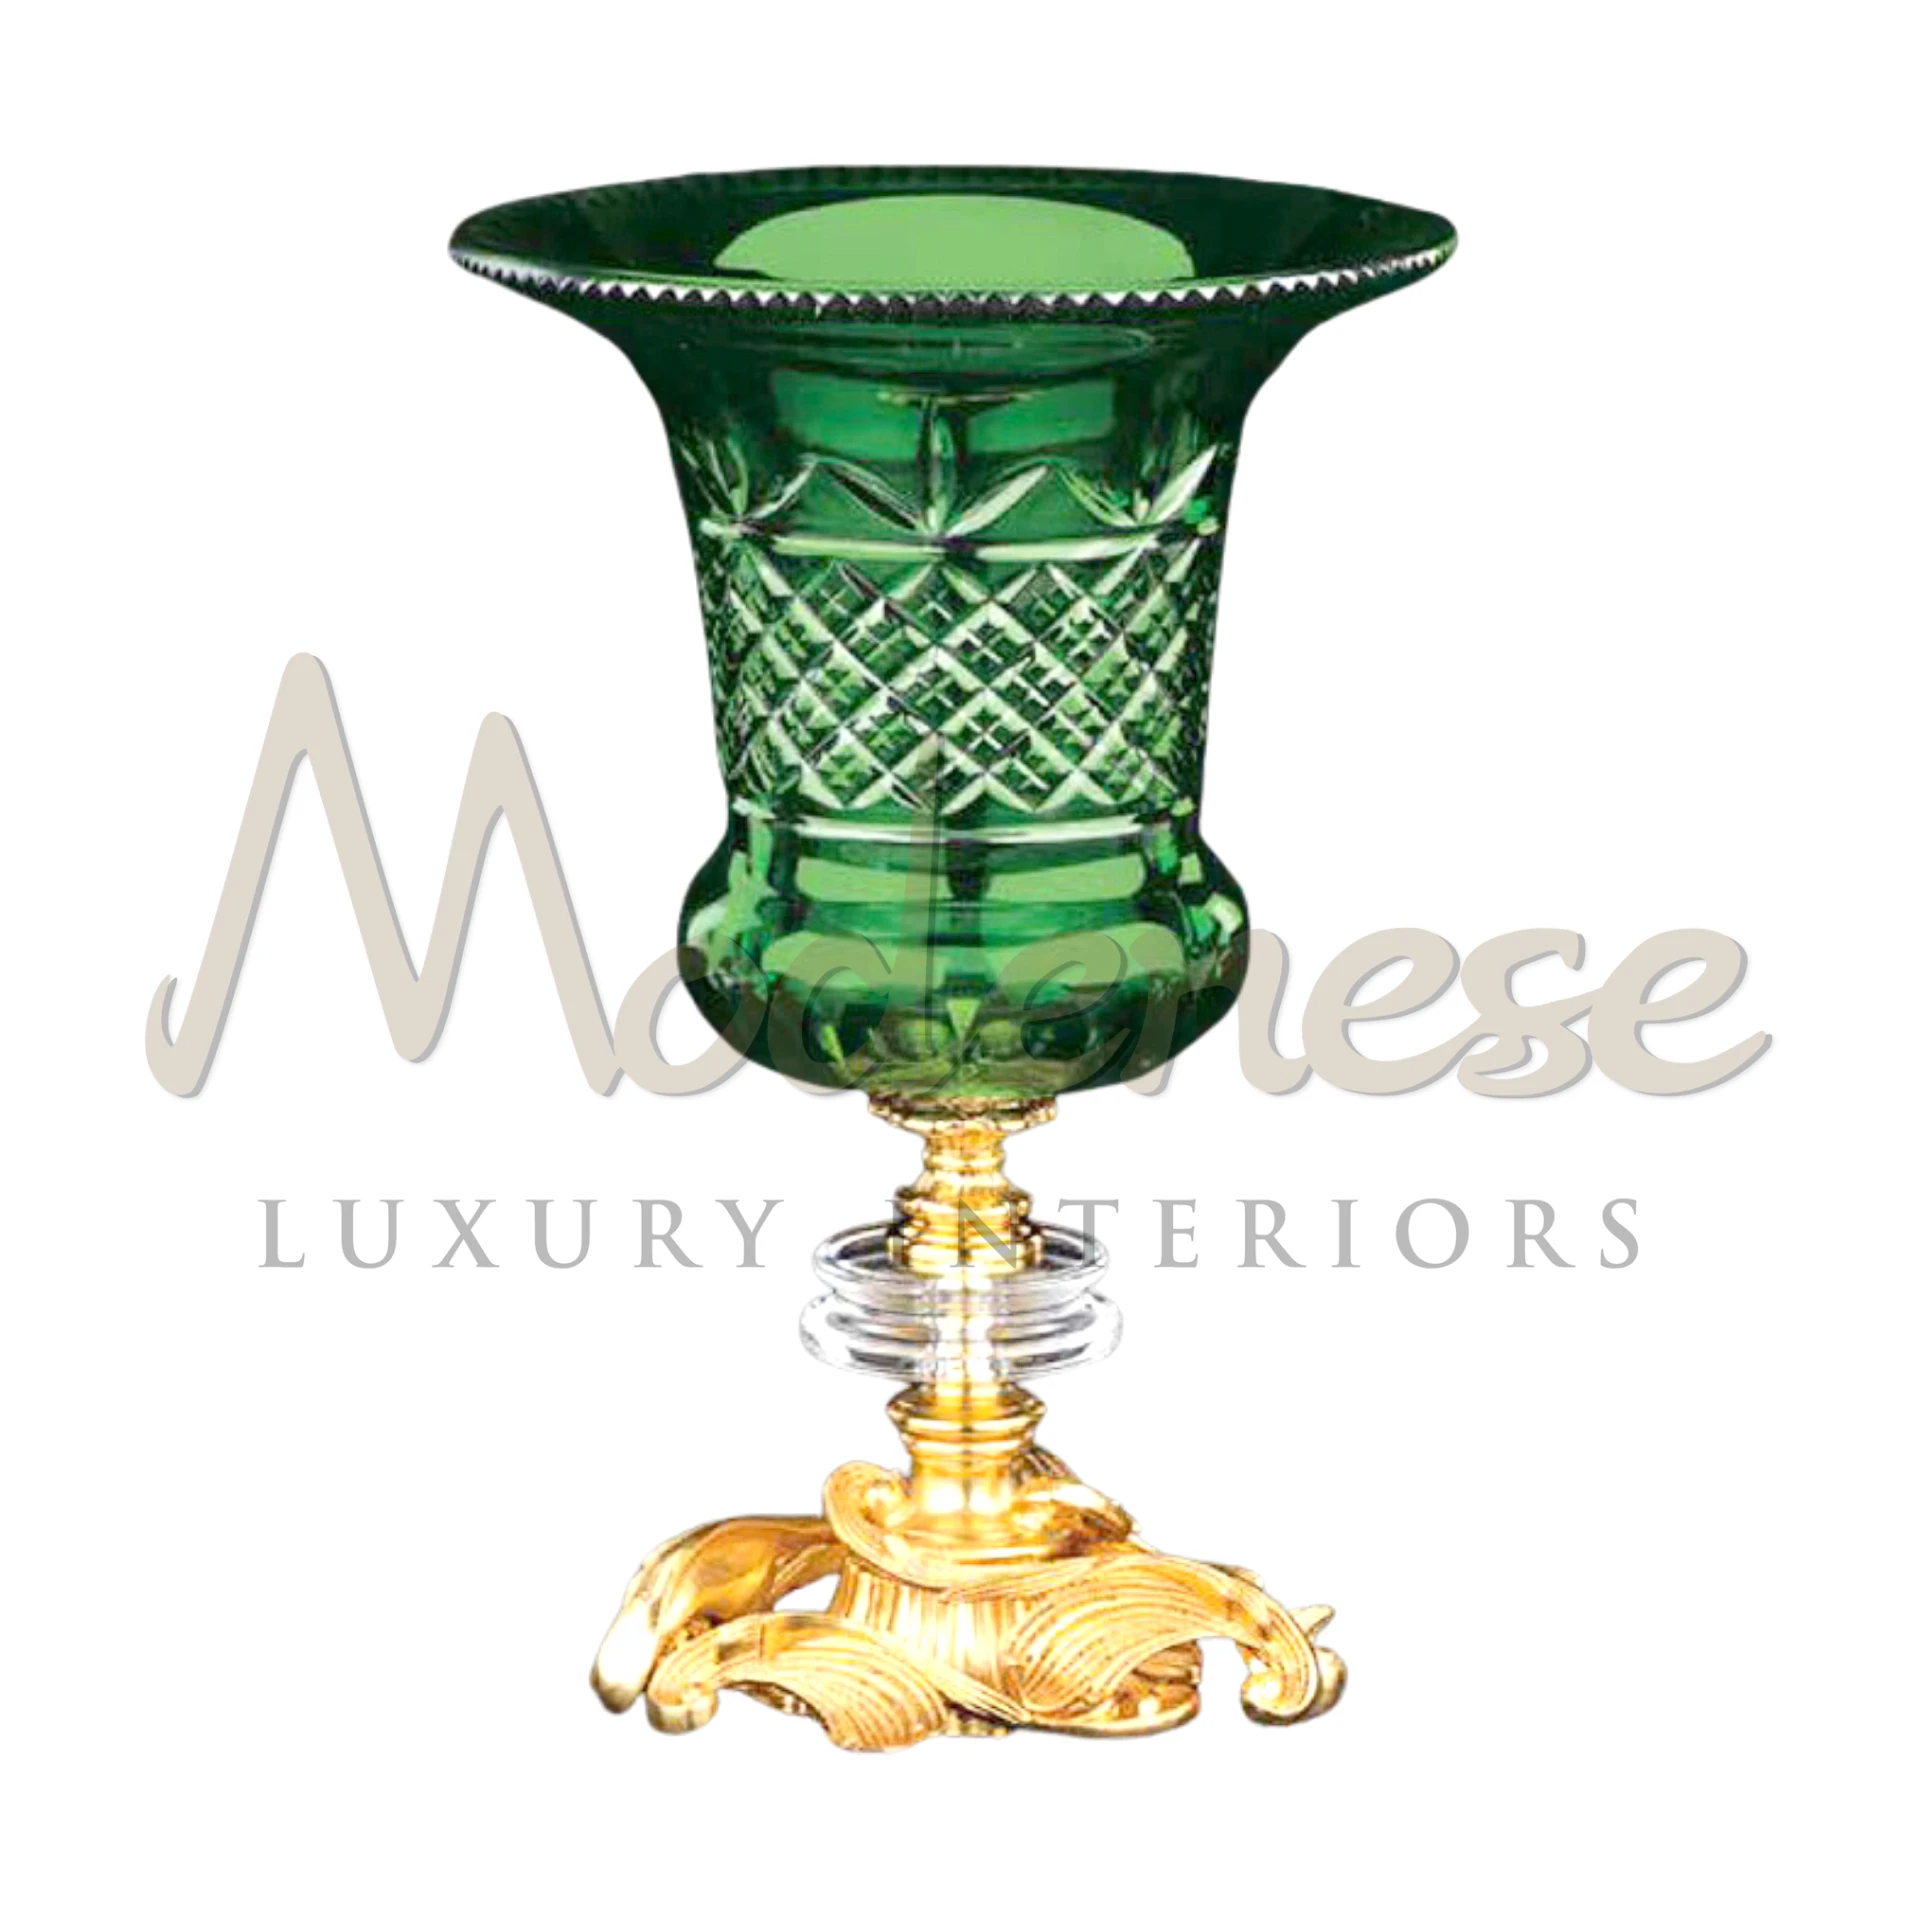 Elegant Luxury Emerald Crystal Vase - Perfect decor accent for luxury interiors.